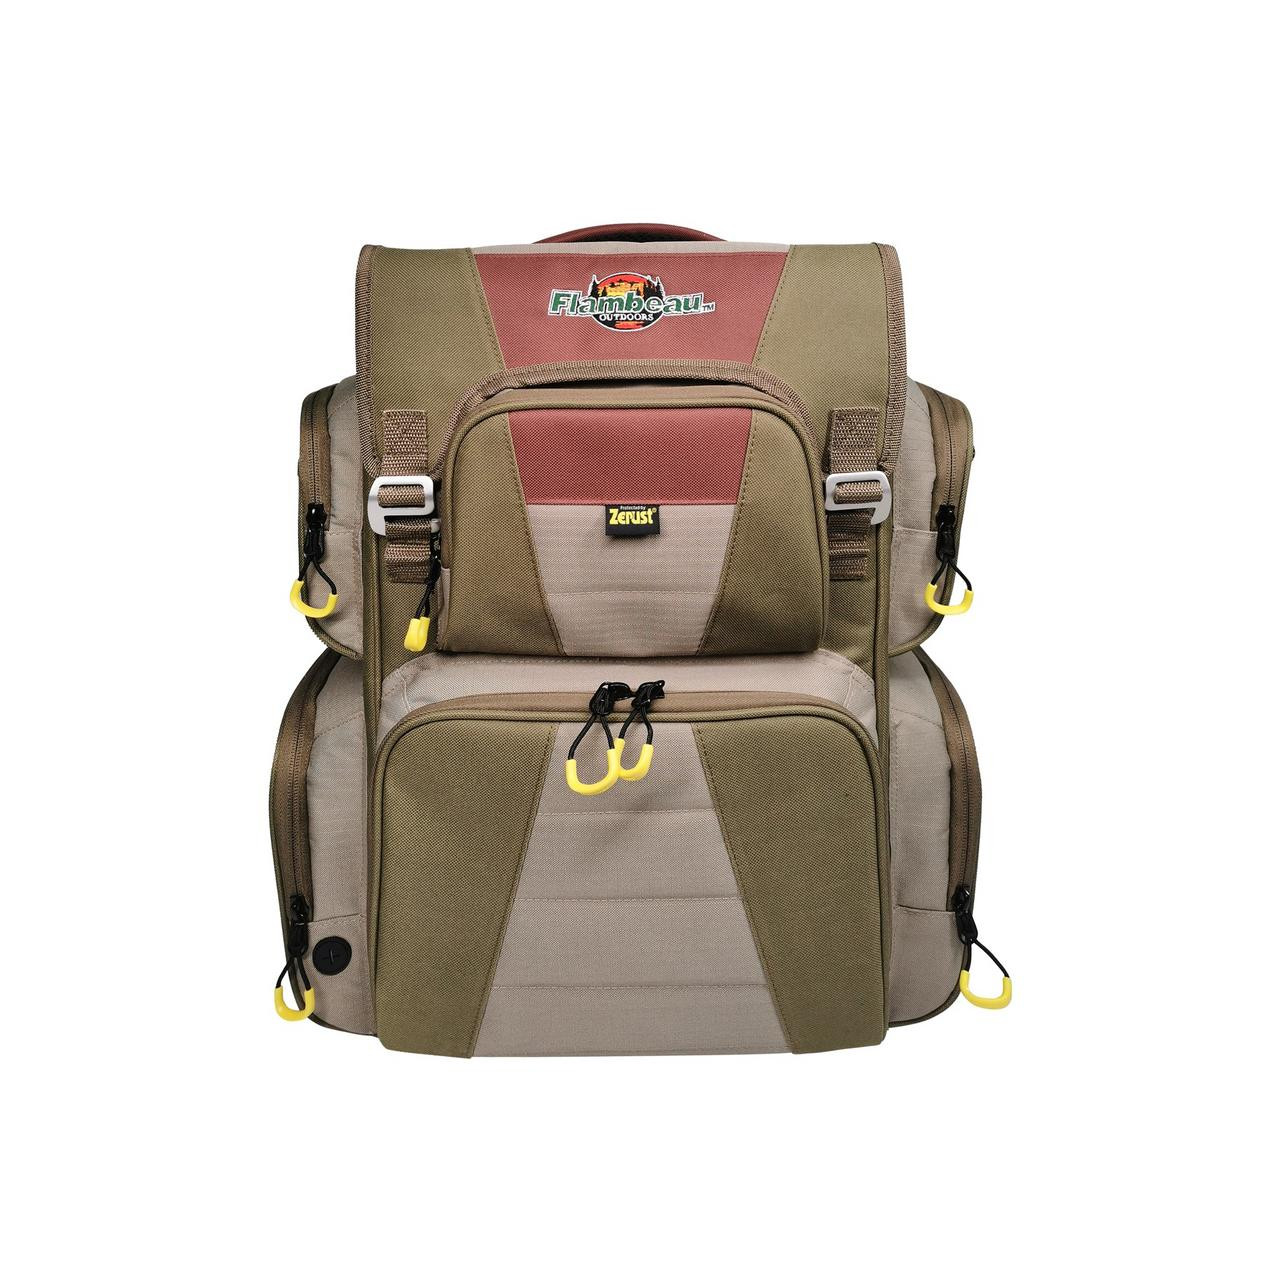 Evolution Outdoors FL40001: 4007 Heritage Zerust Tackle Bag